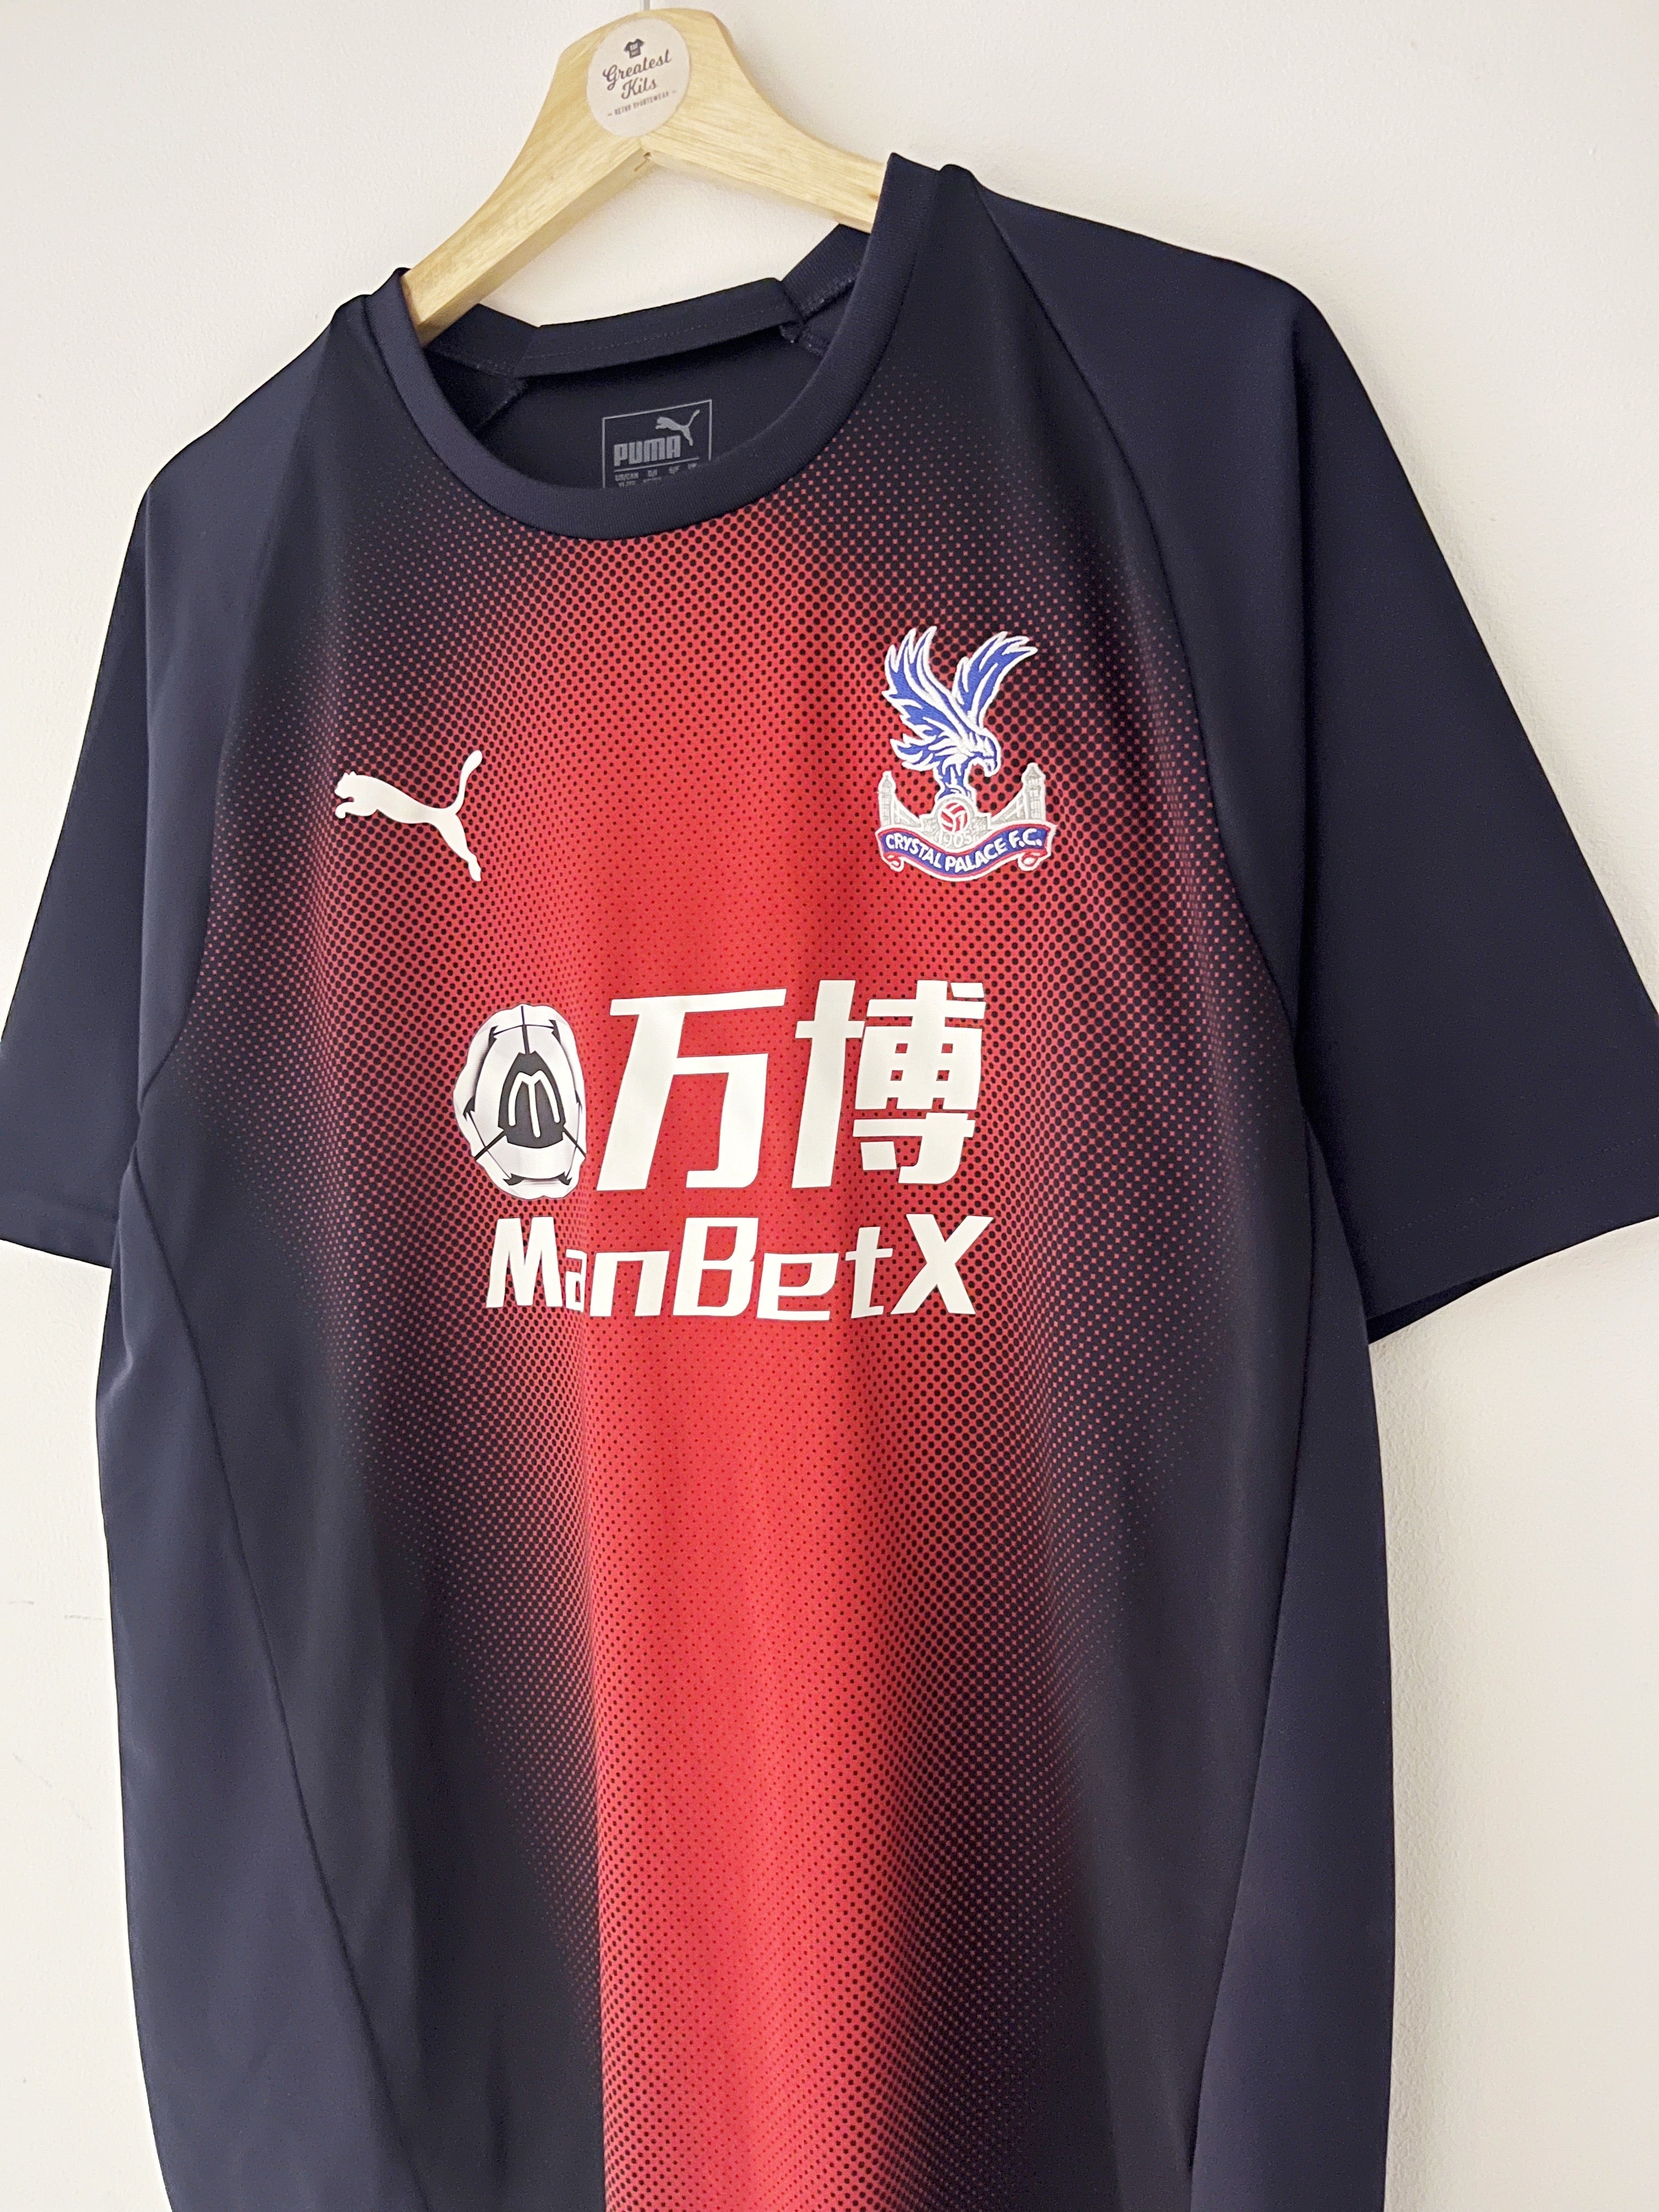 2019/20 Crystal Palace Training Shirt (XL) 9/10